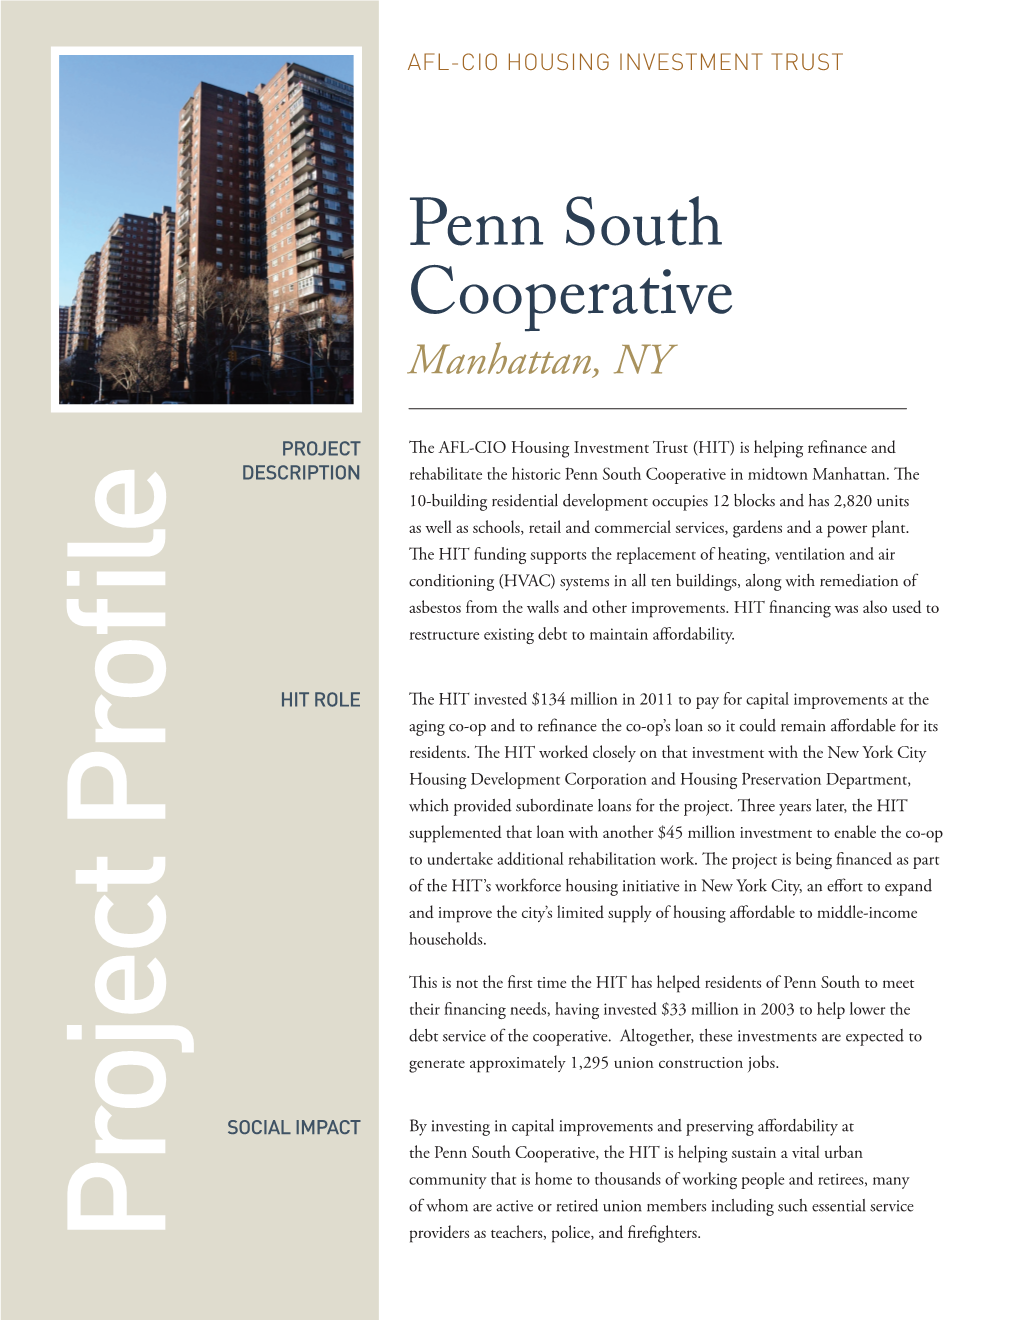 Penn South Cooperative Manhattan, NY